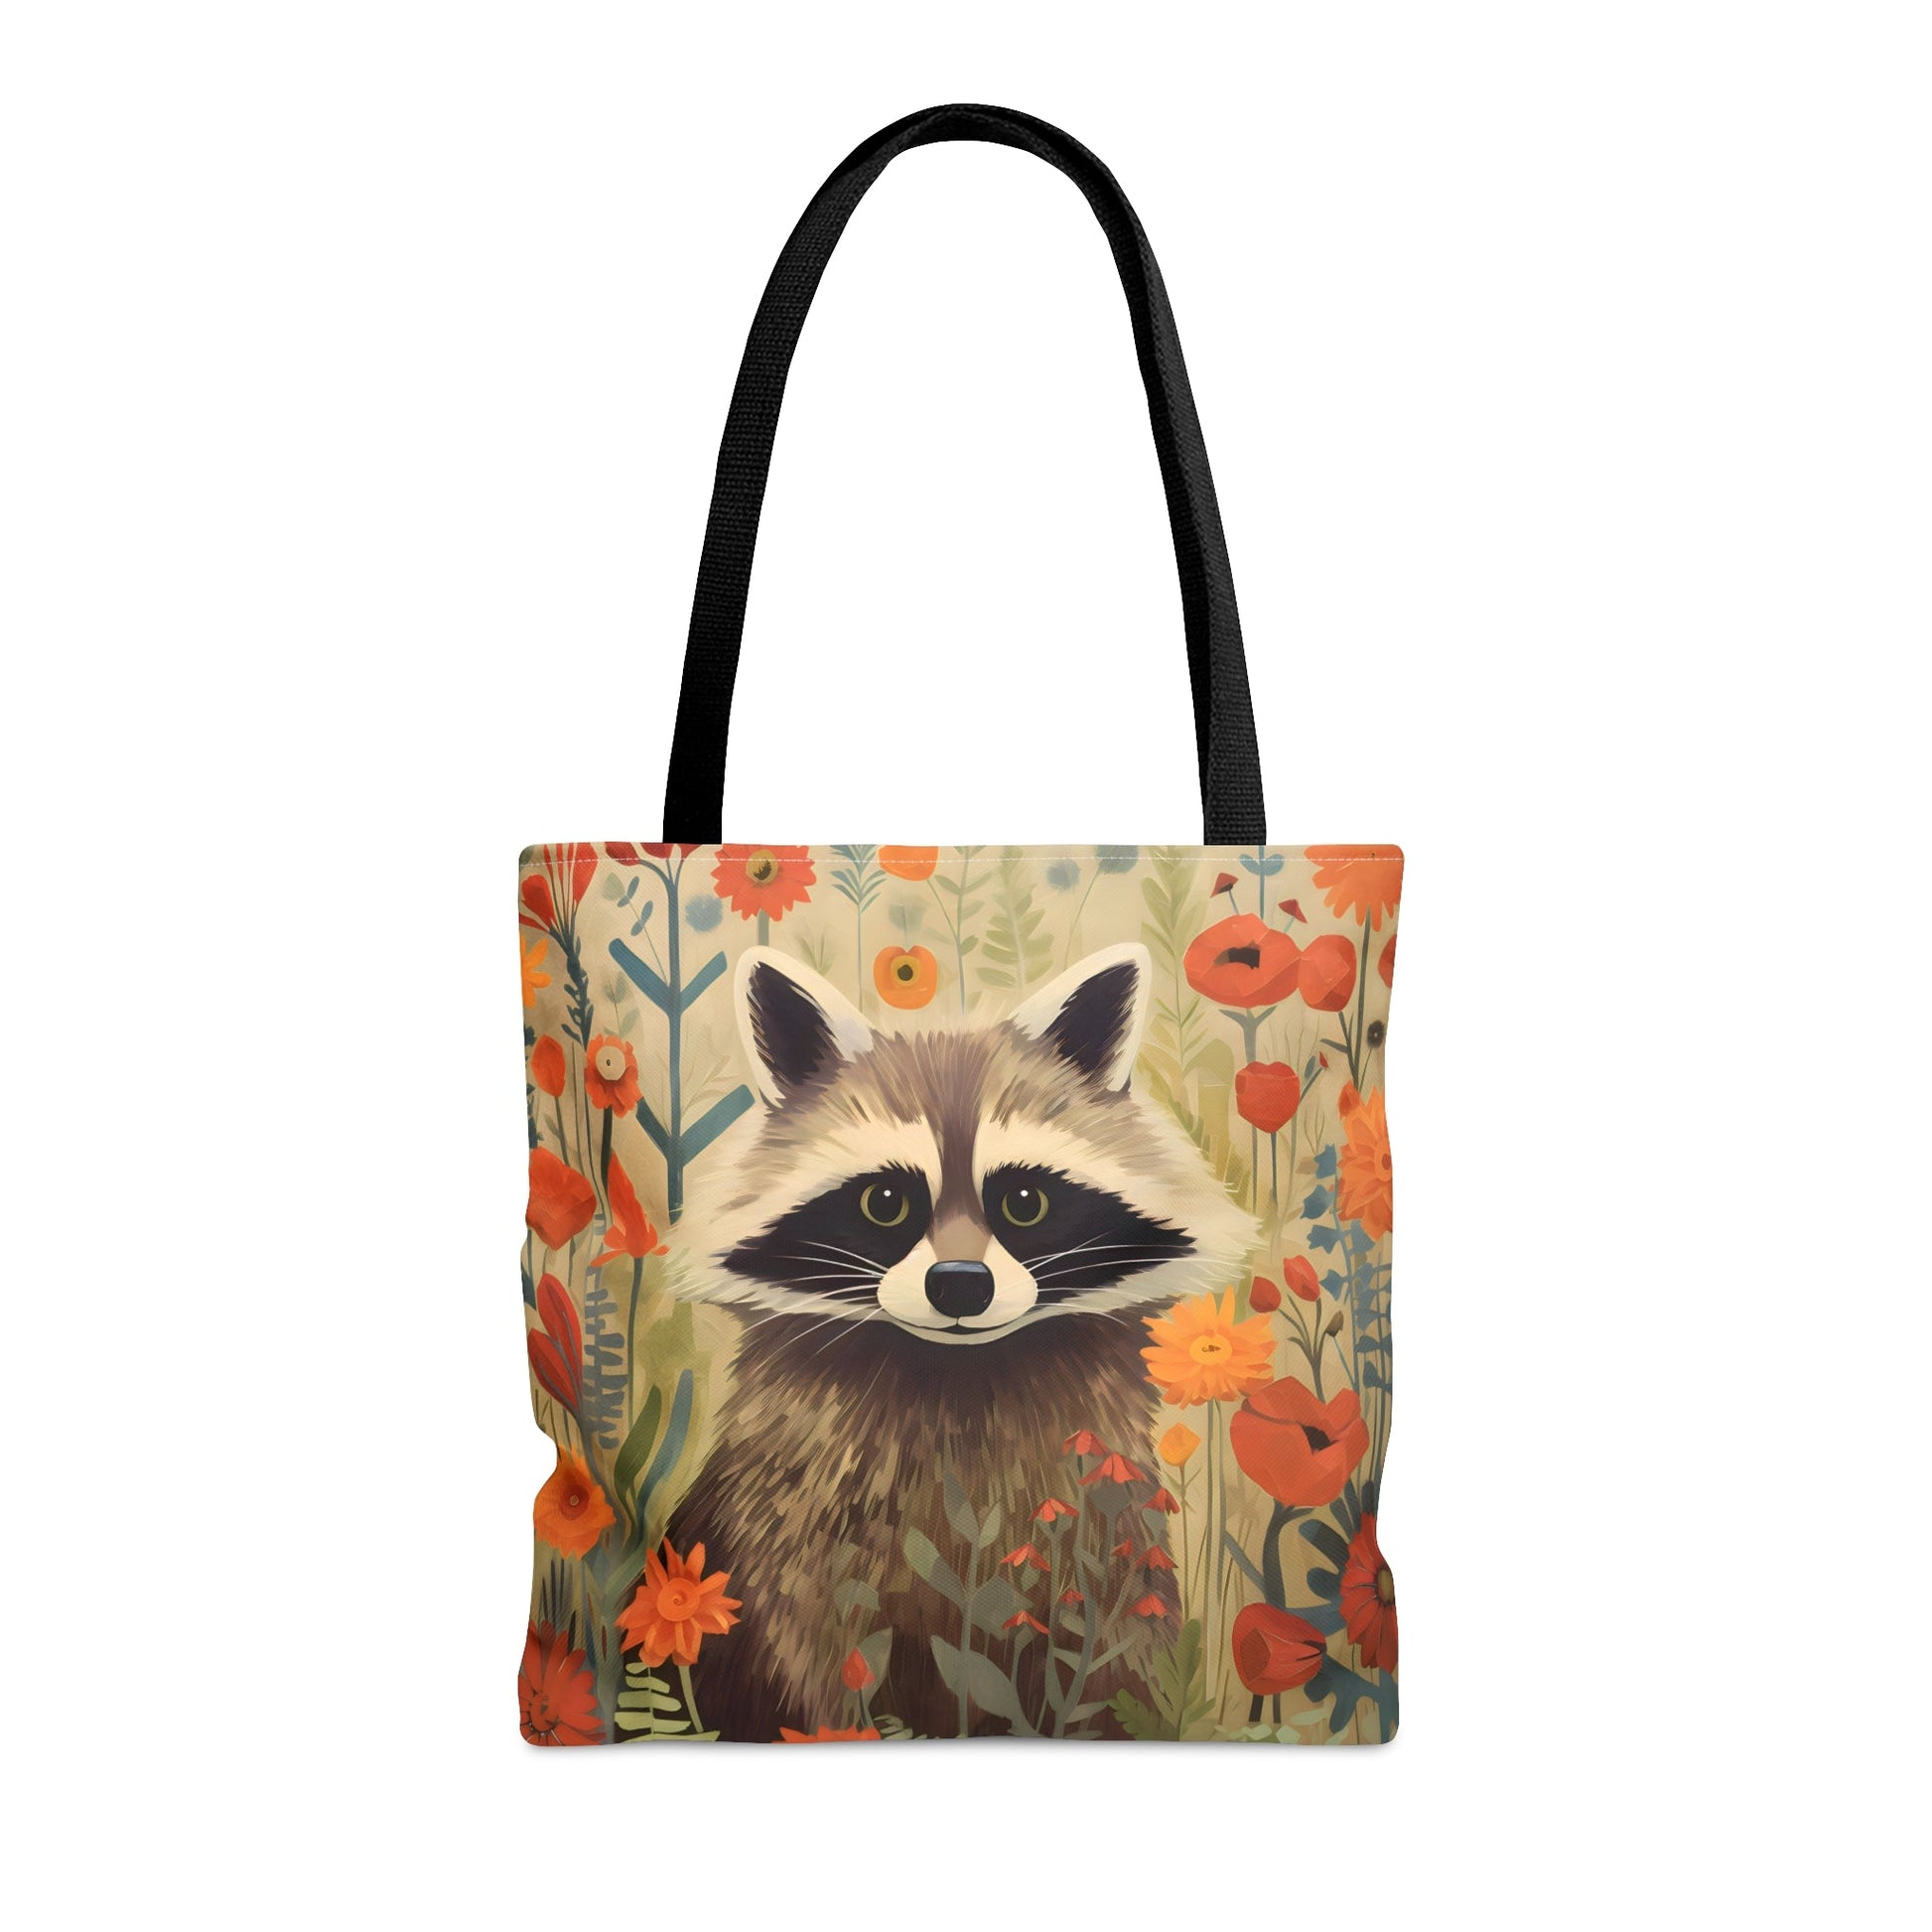 Mid-Century Modern Raccoon in a Garden Tote Bag